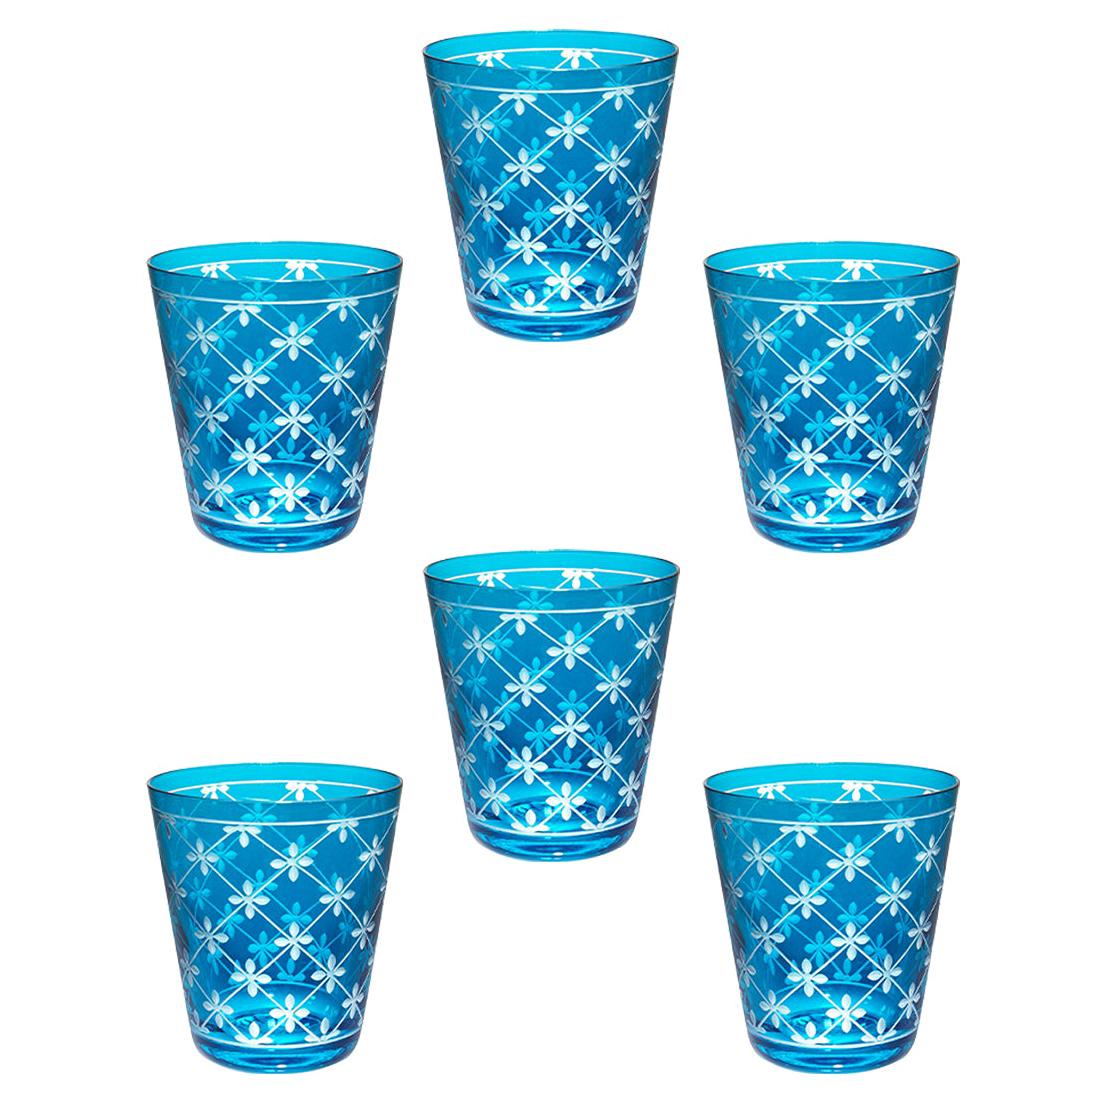  Sofina Boutique Kitzbuehel ensemble de six gobelets en cristal bleu de style campagnard